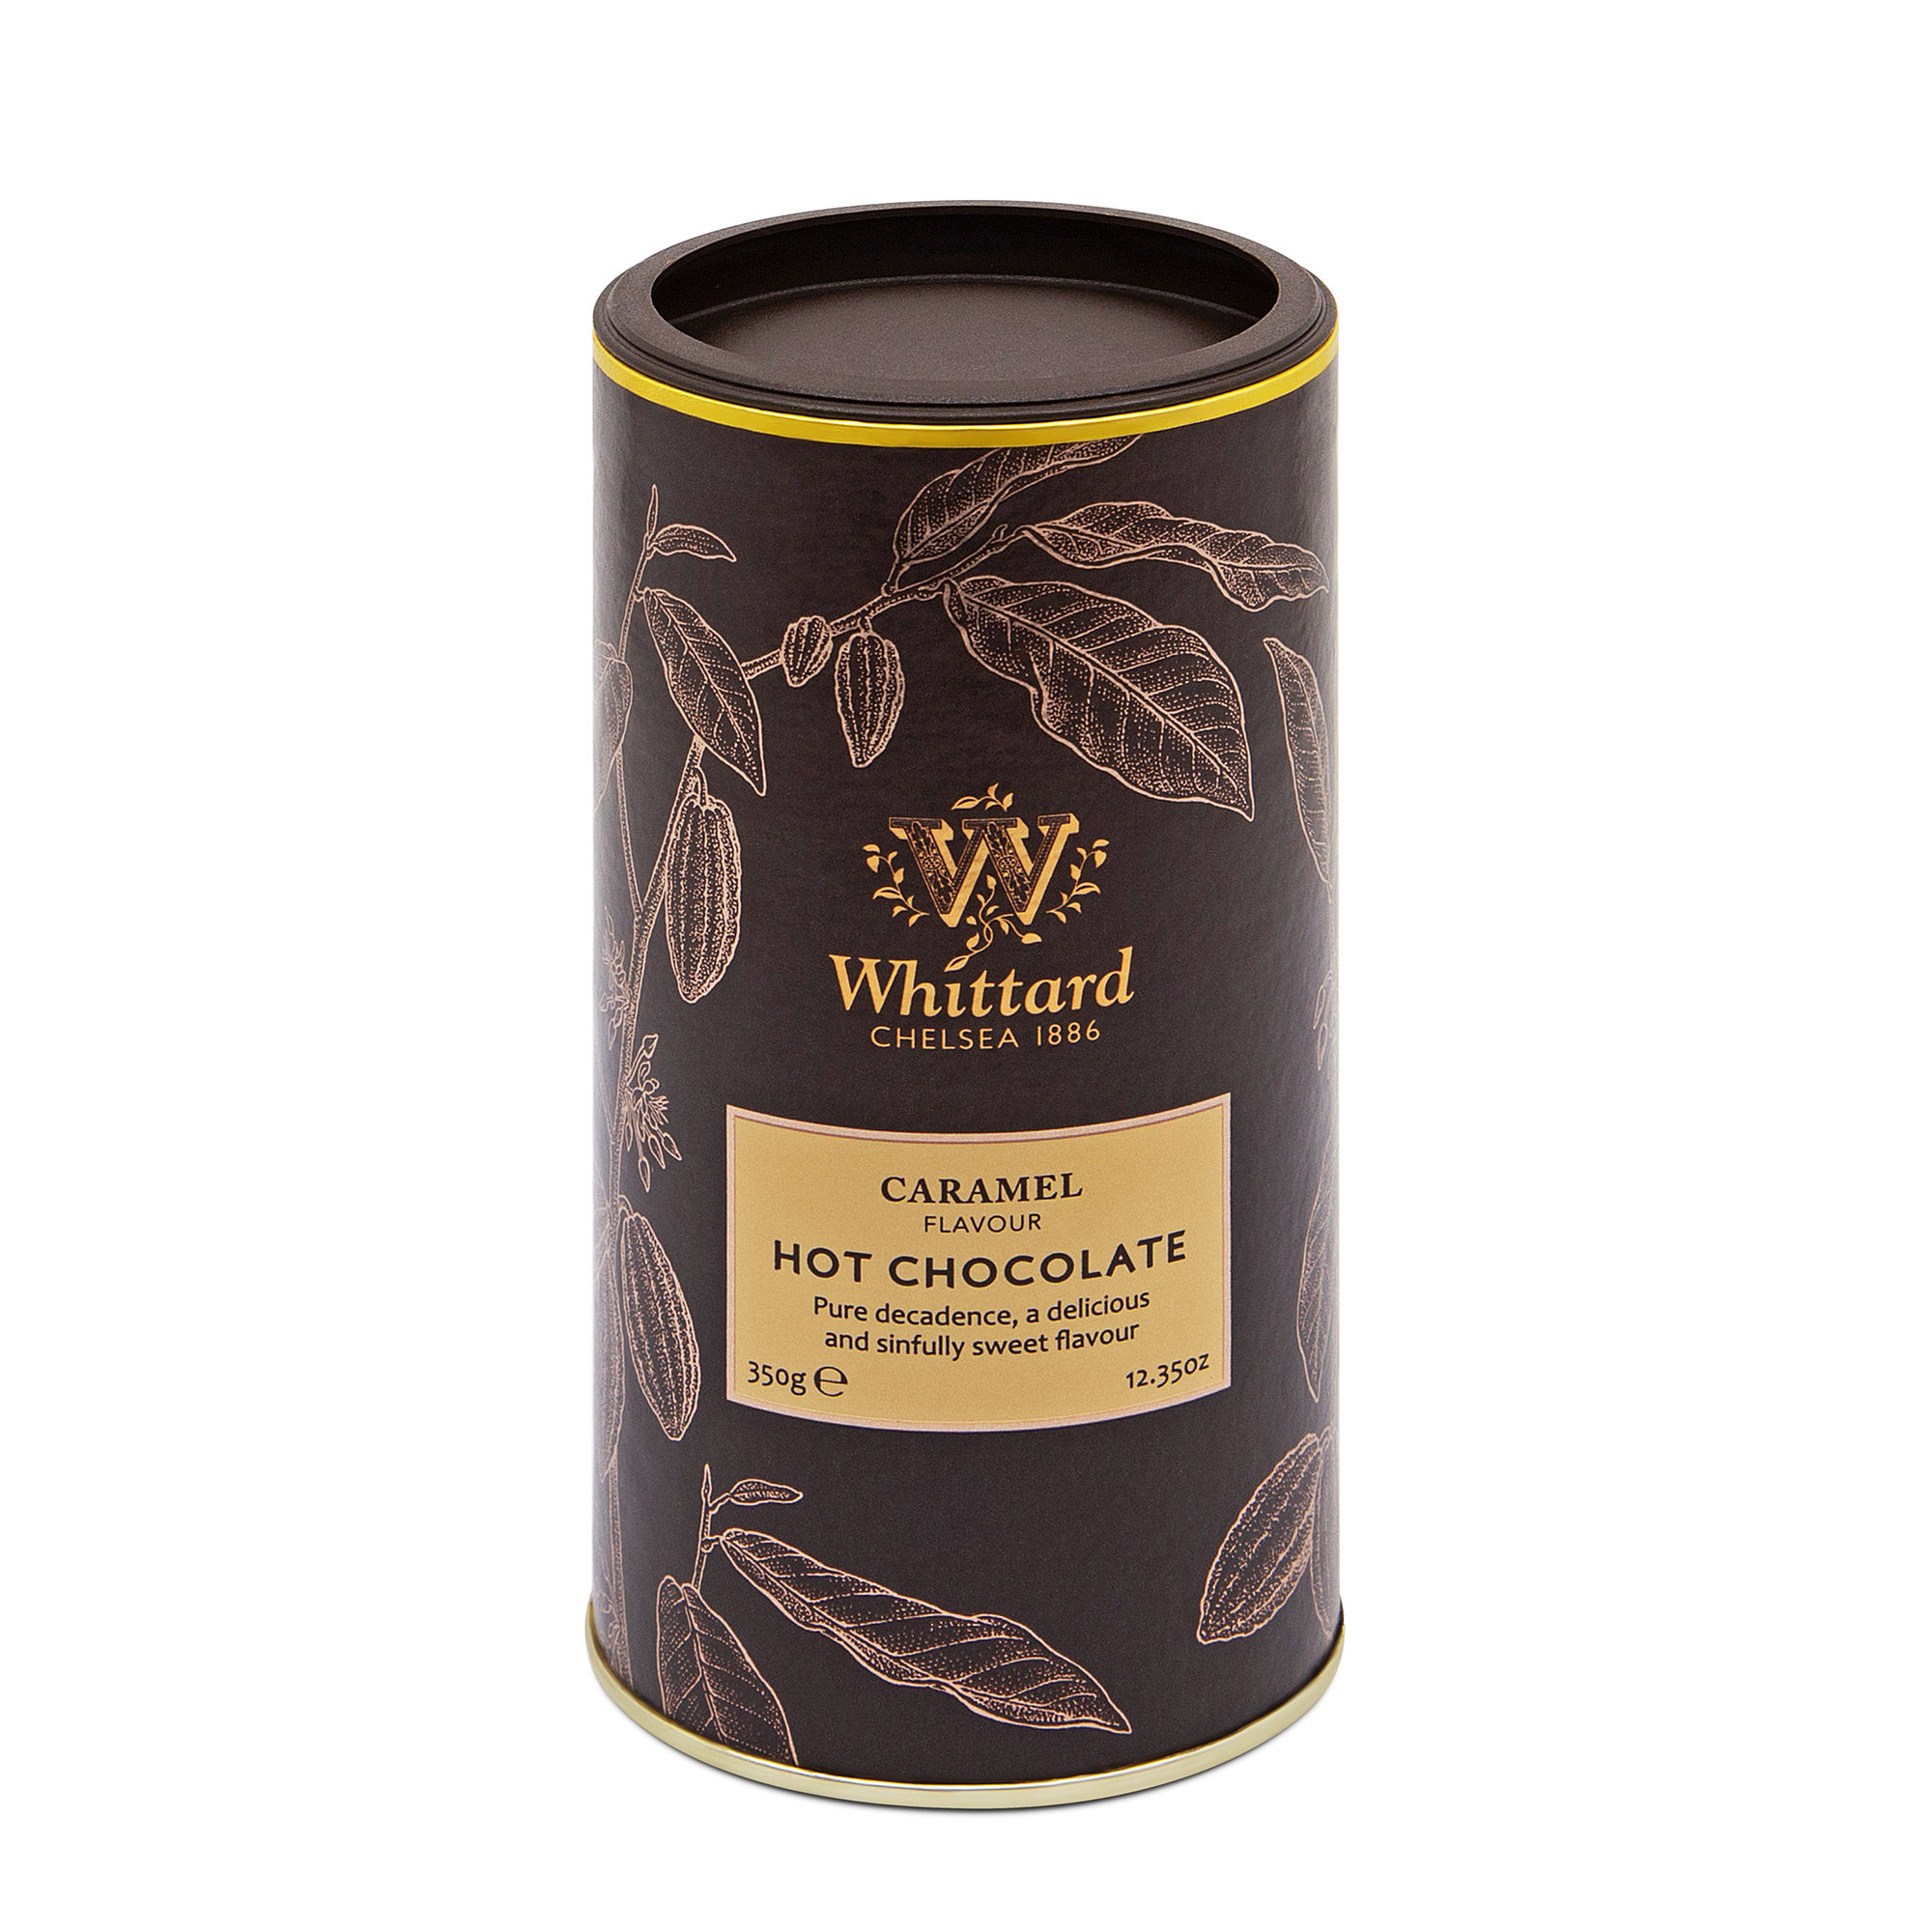 Caramel Flavour Hot Chocolate